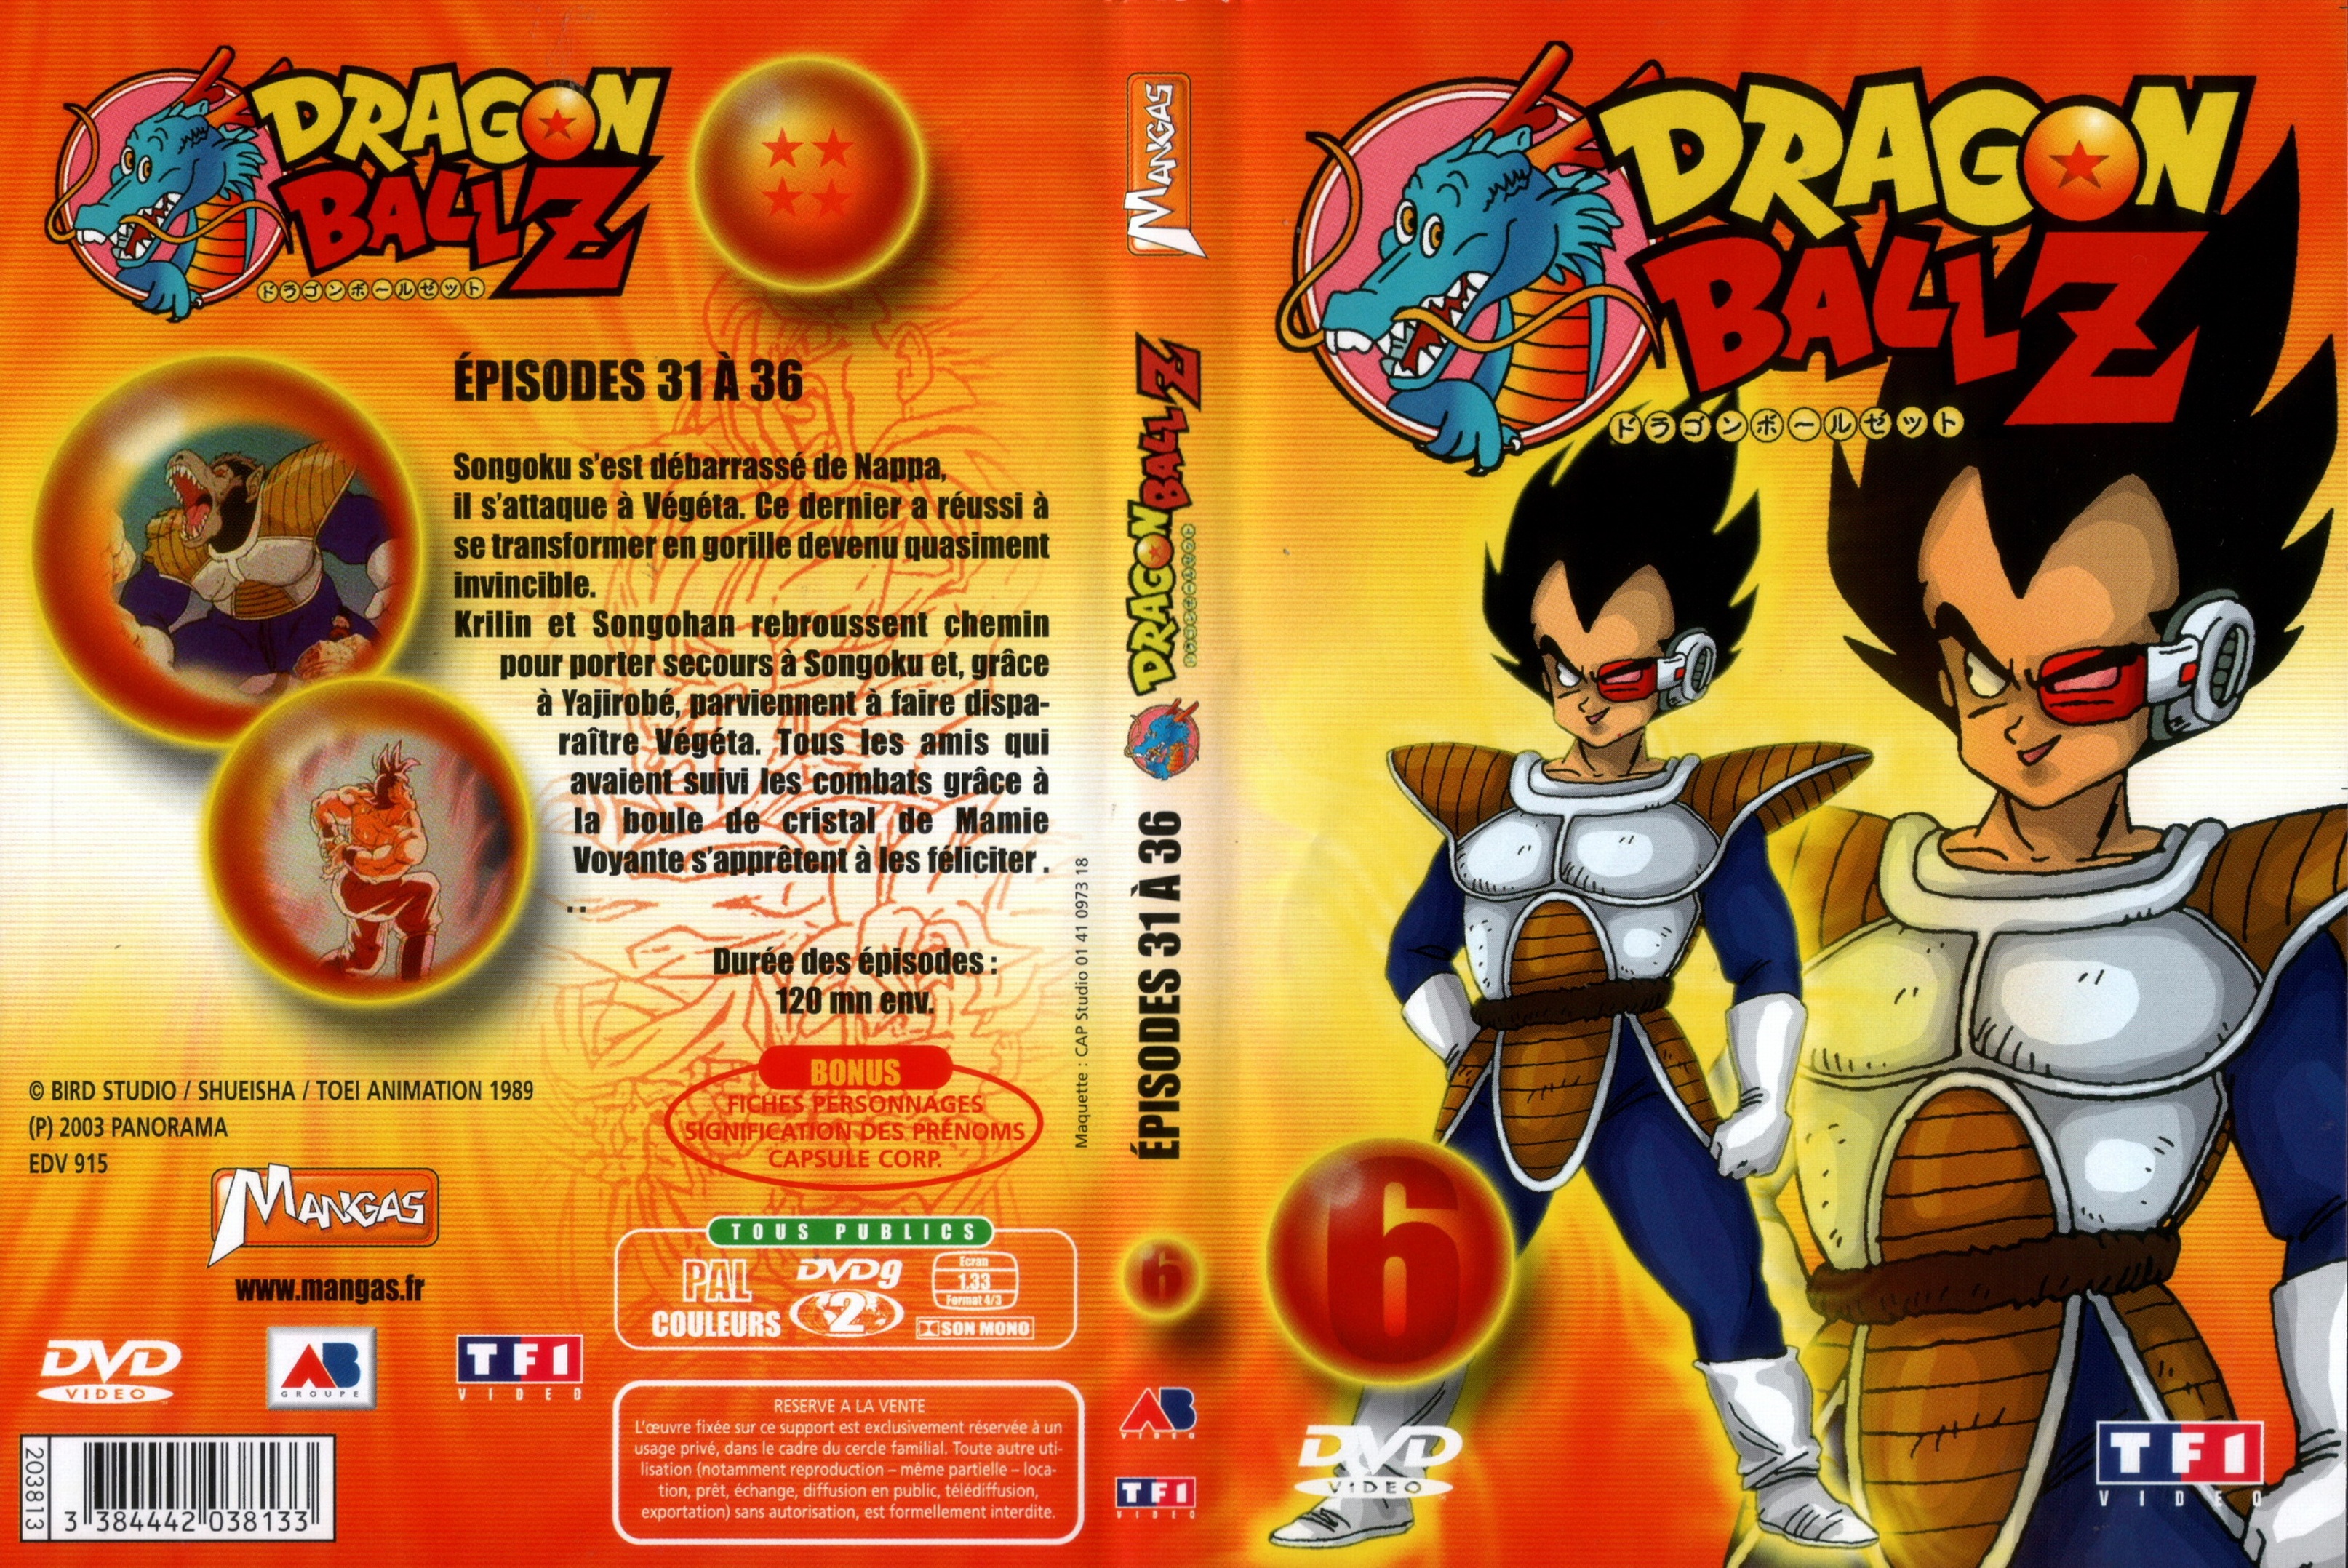 Jaquette DVD Dragon ball Z vol 06